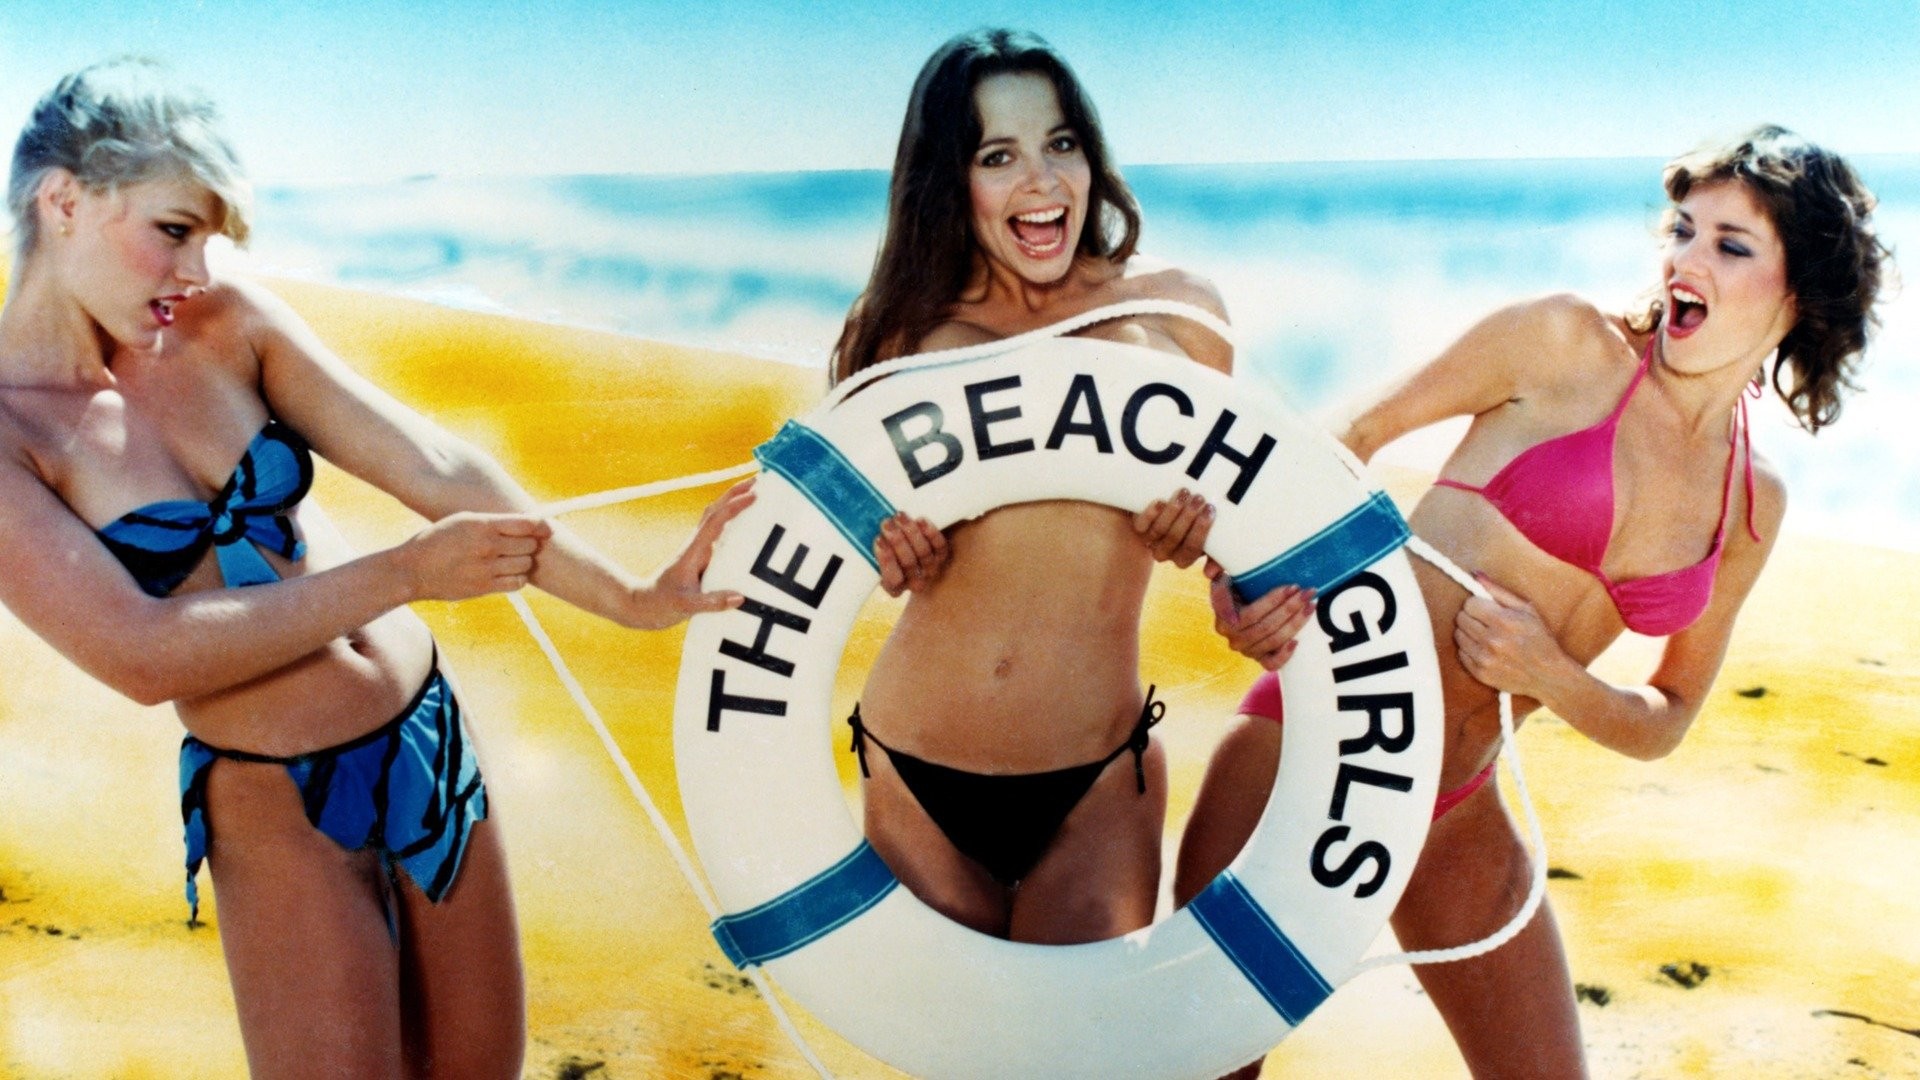 Beach Girls (Curta 2007) - IMDb